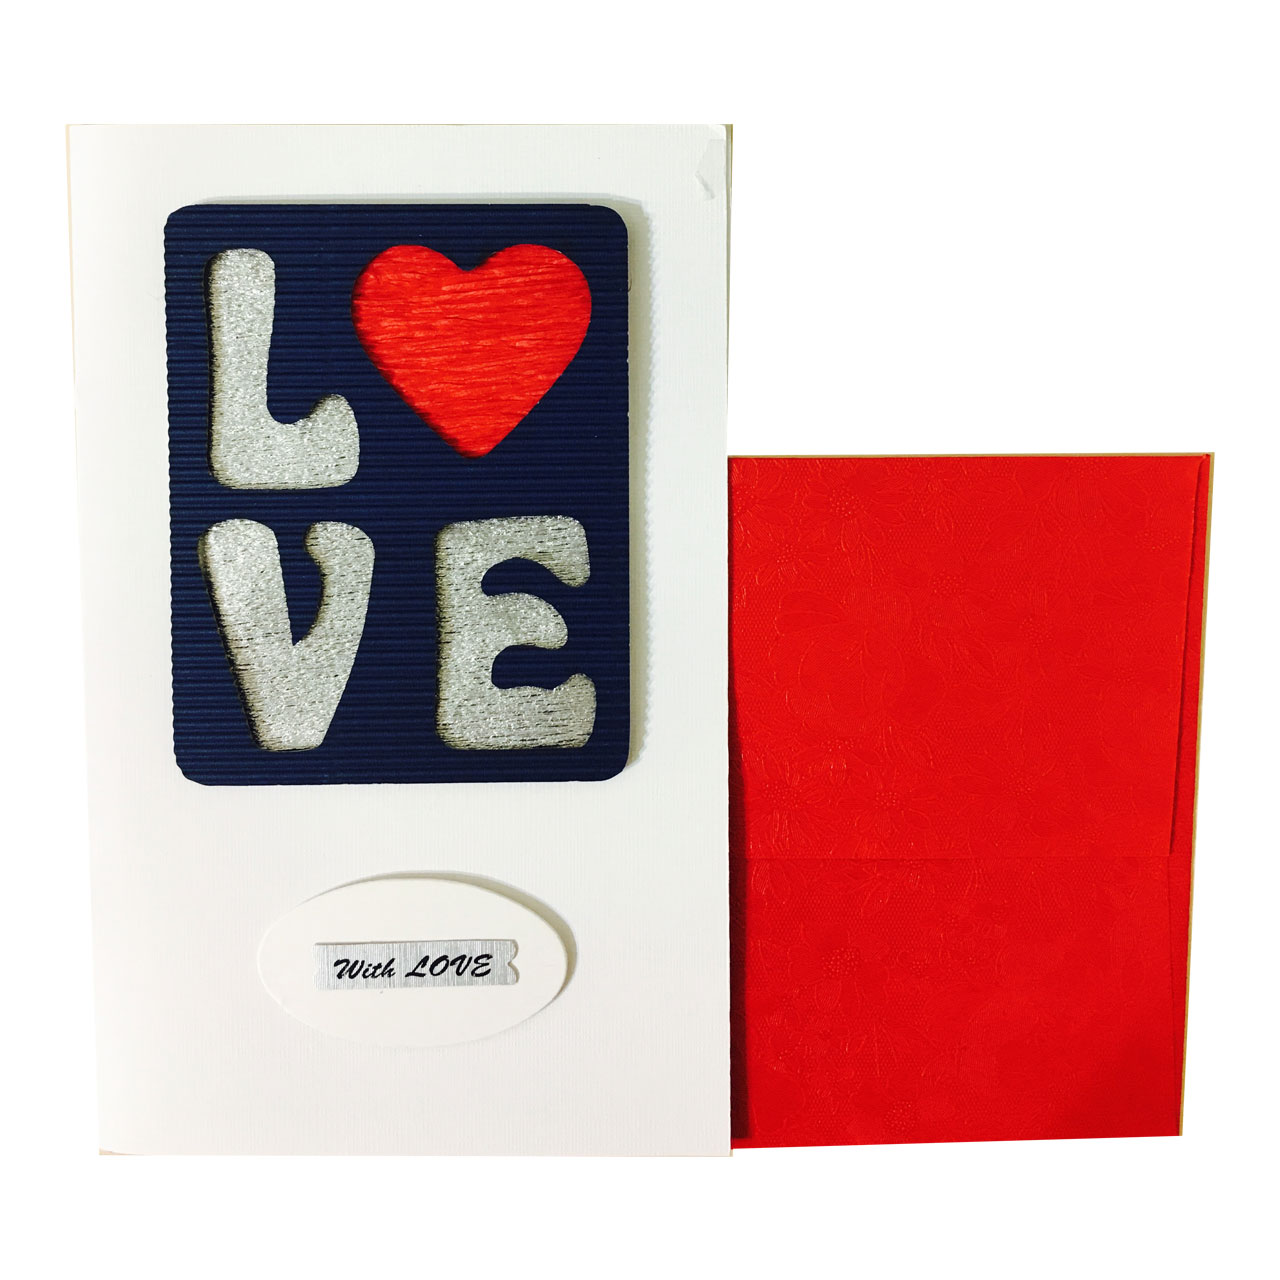 کارت پستال دست ساز مدل With Love02